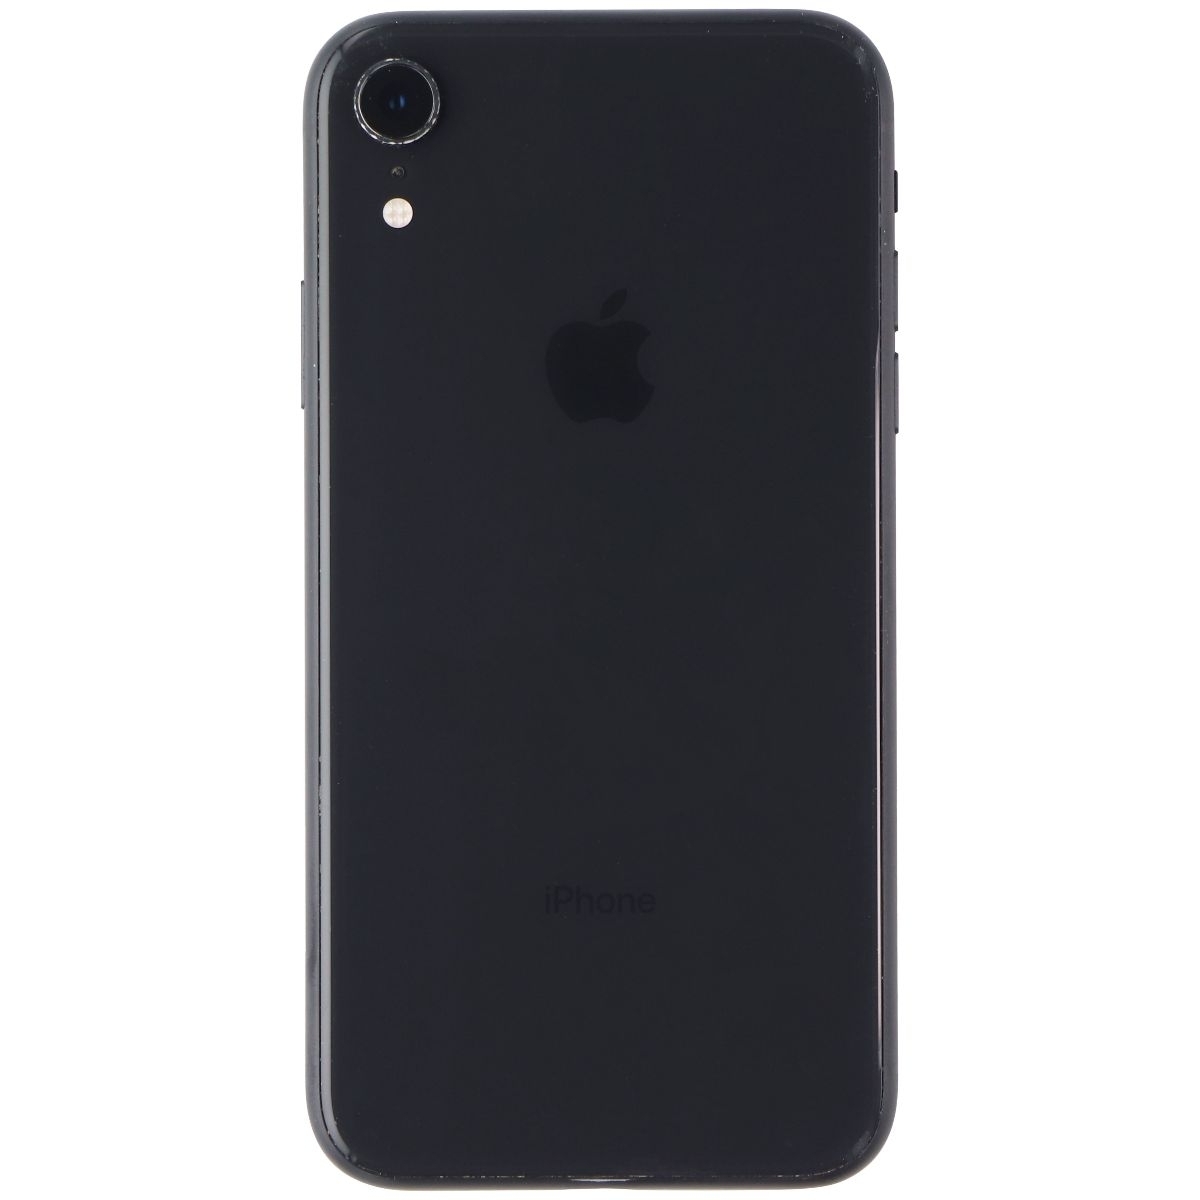 Apple IPhone XR (6.1-inch) Smartphone (A1984) Unlocked - 64GB / Black